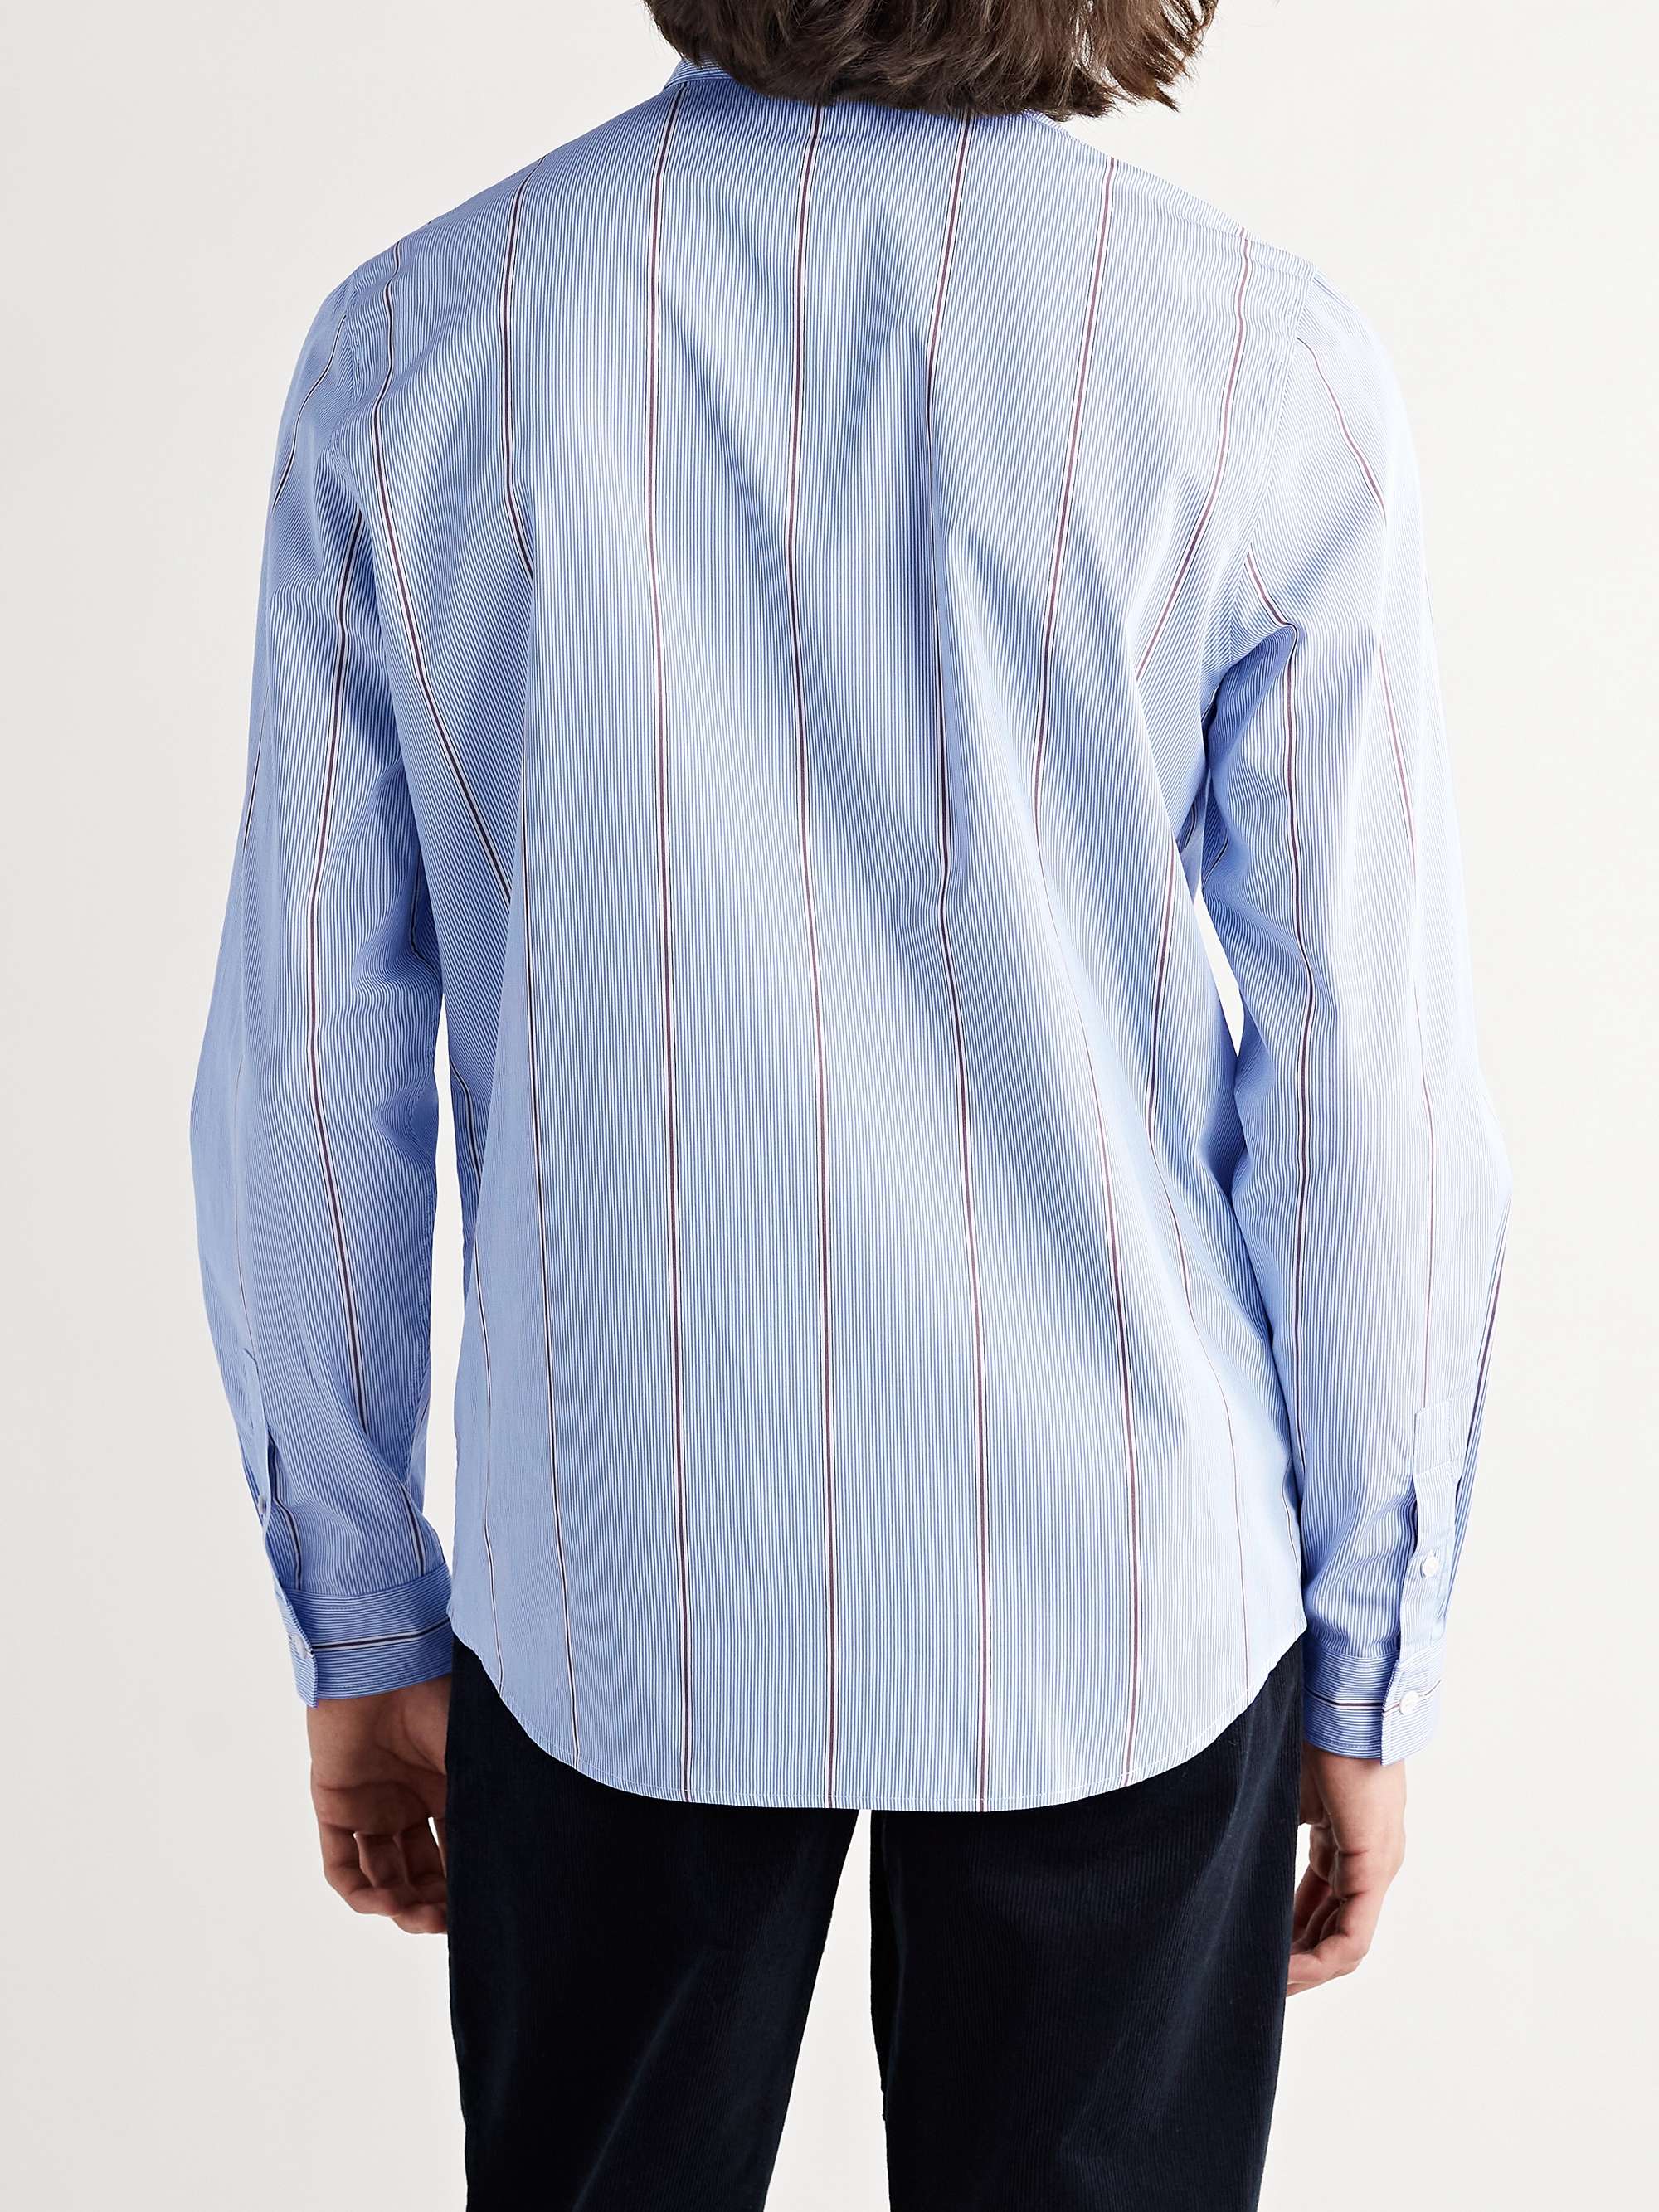 A.P.C. Striped Cotton-Poplin Shirt